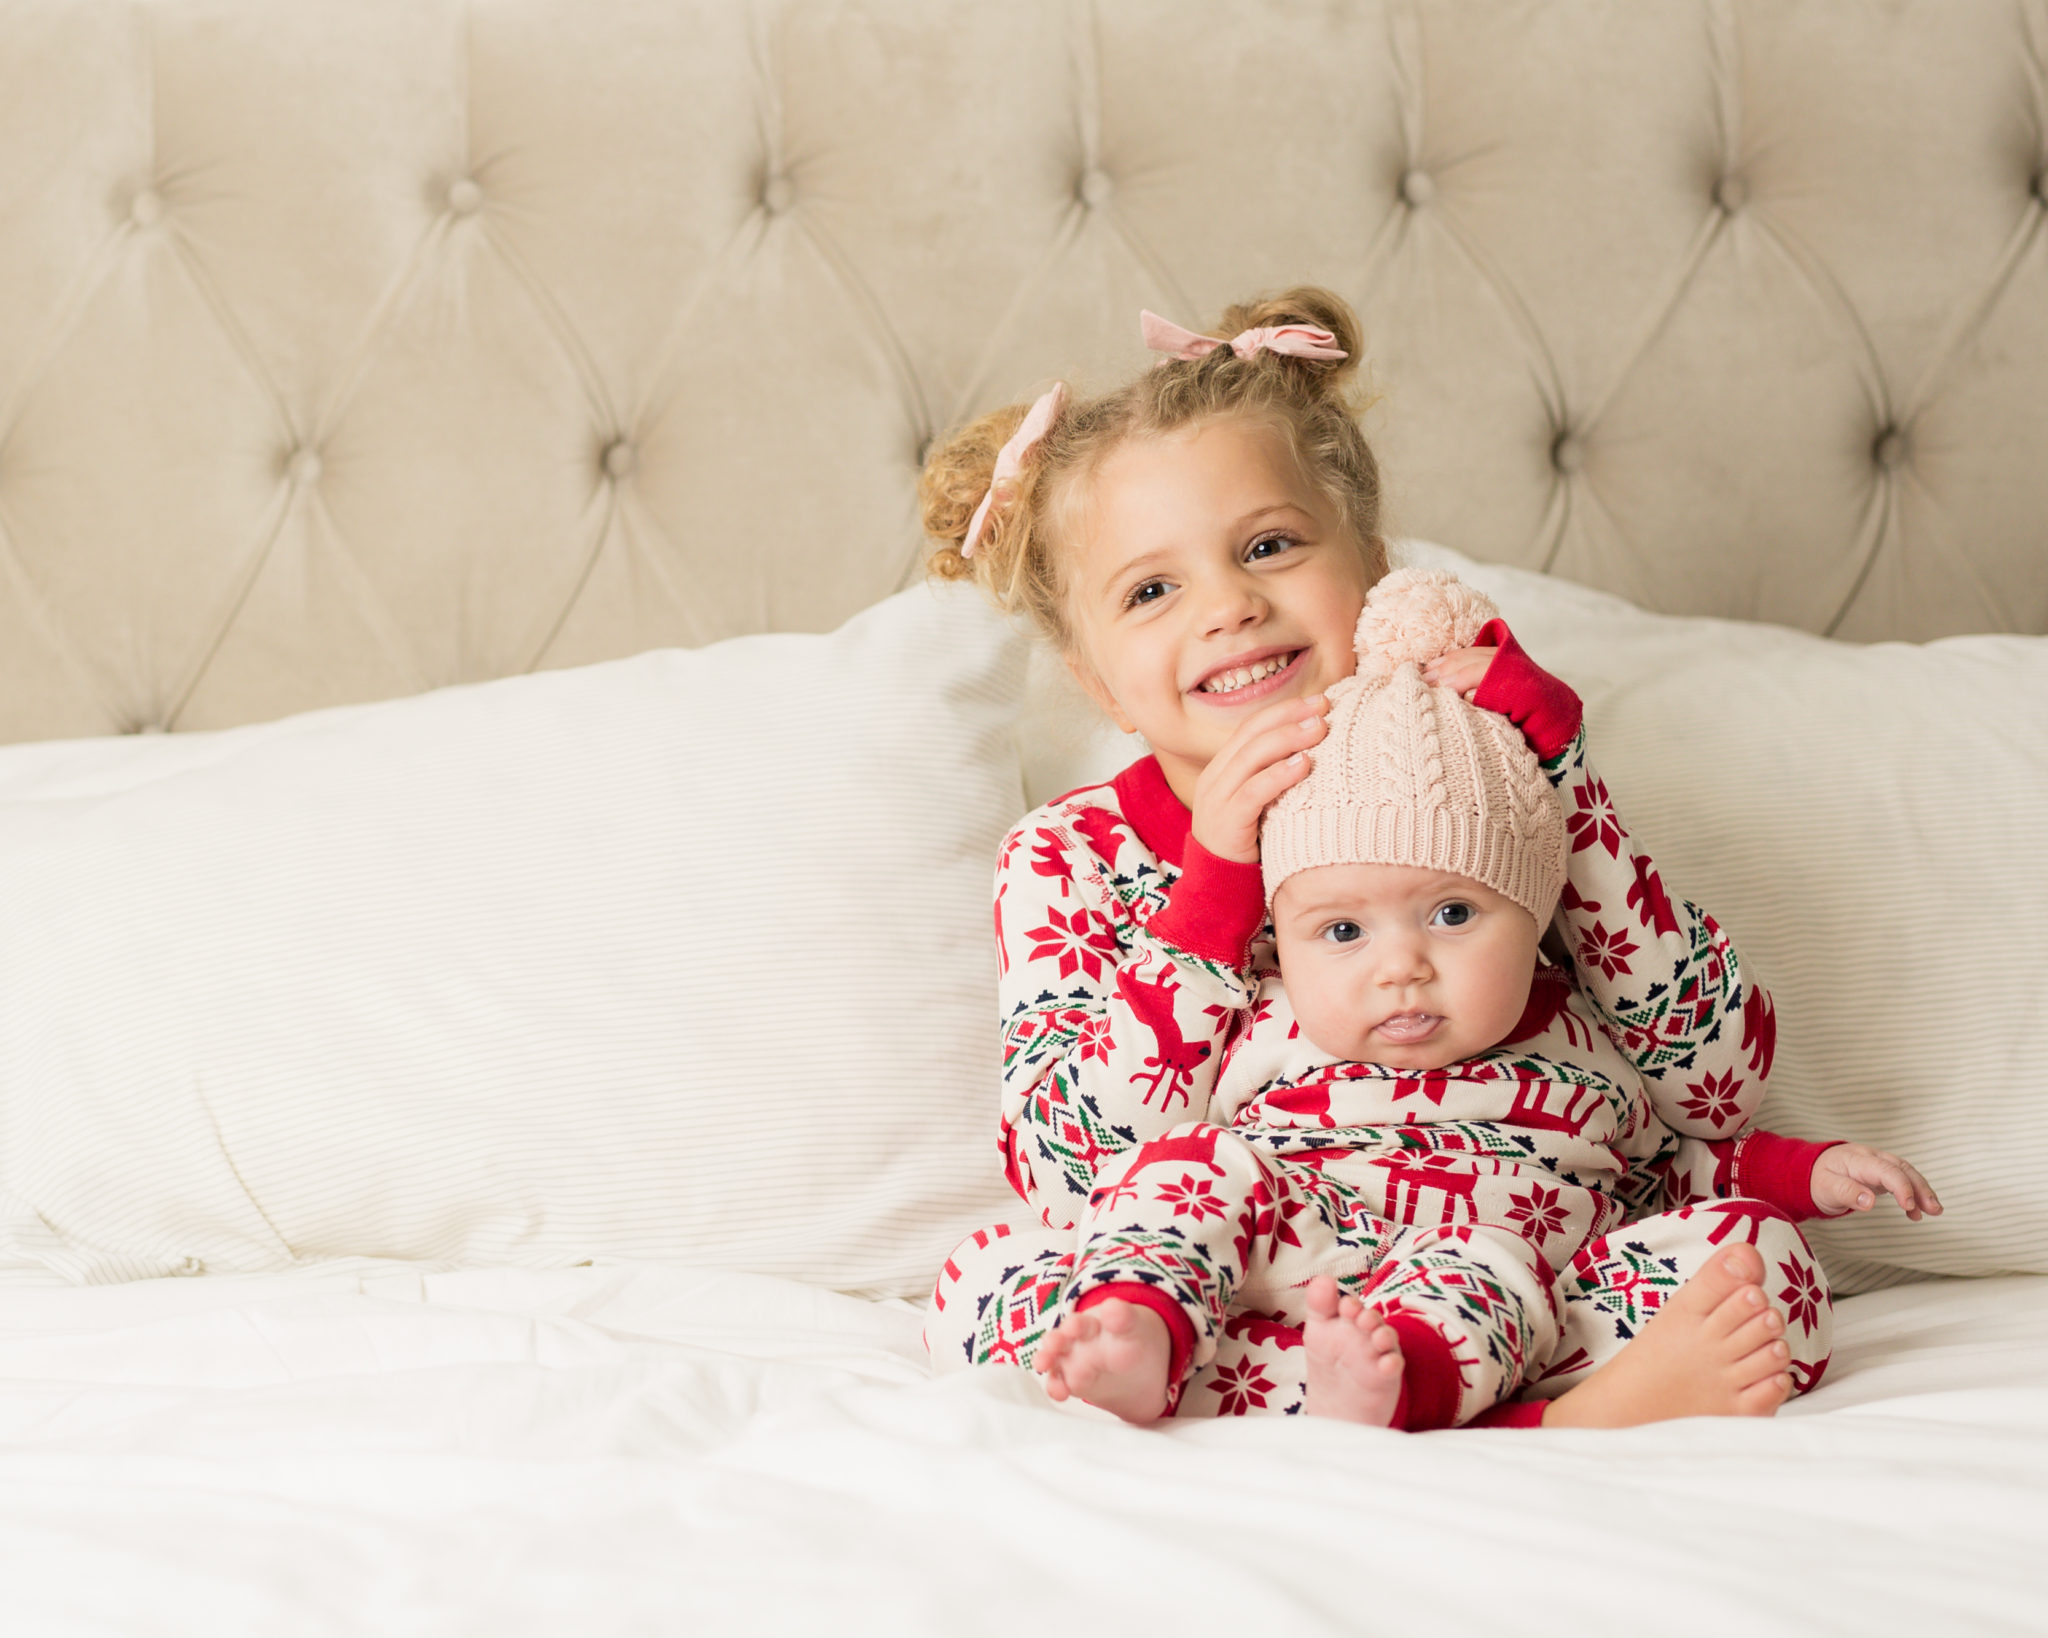 hanna andersson family matching holiday christmas pajamas 2018